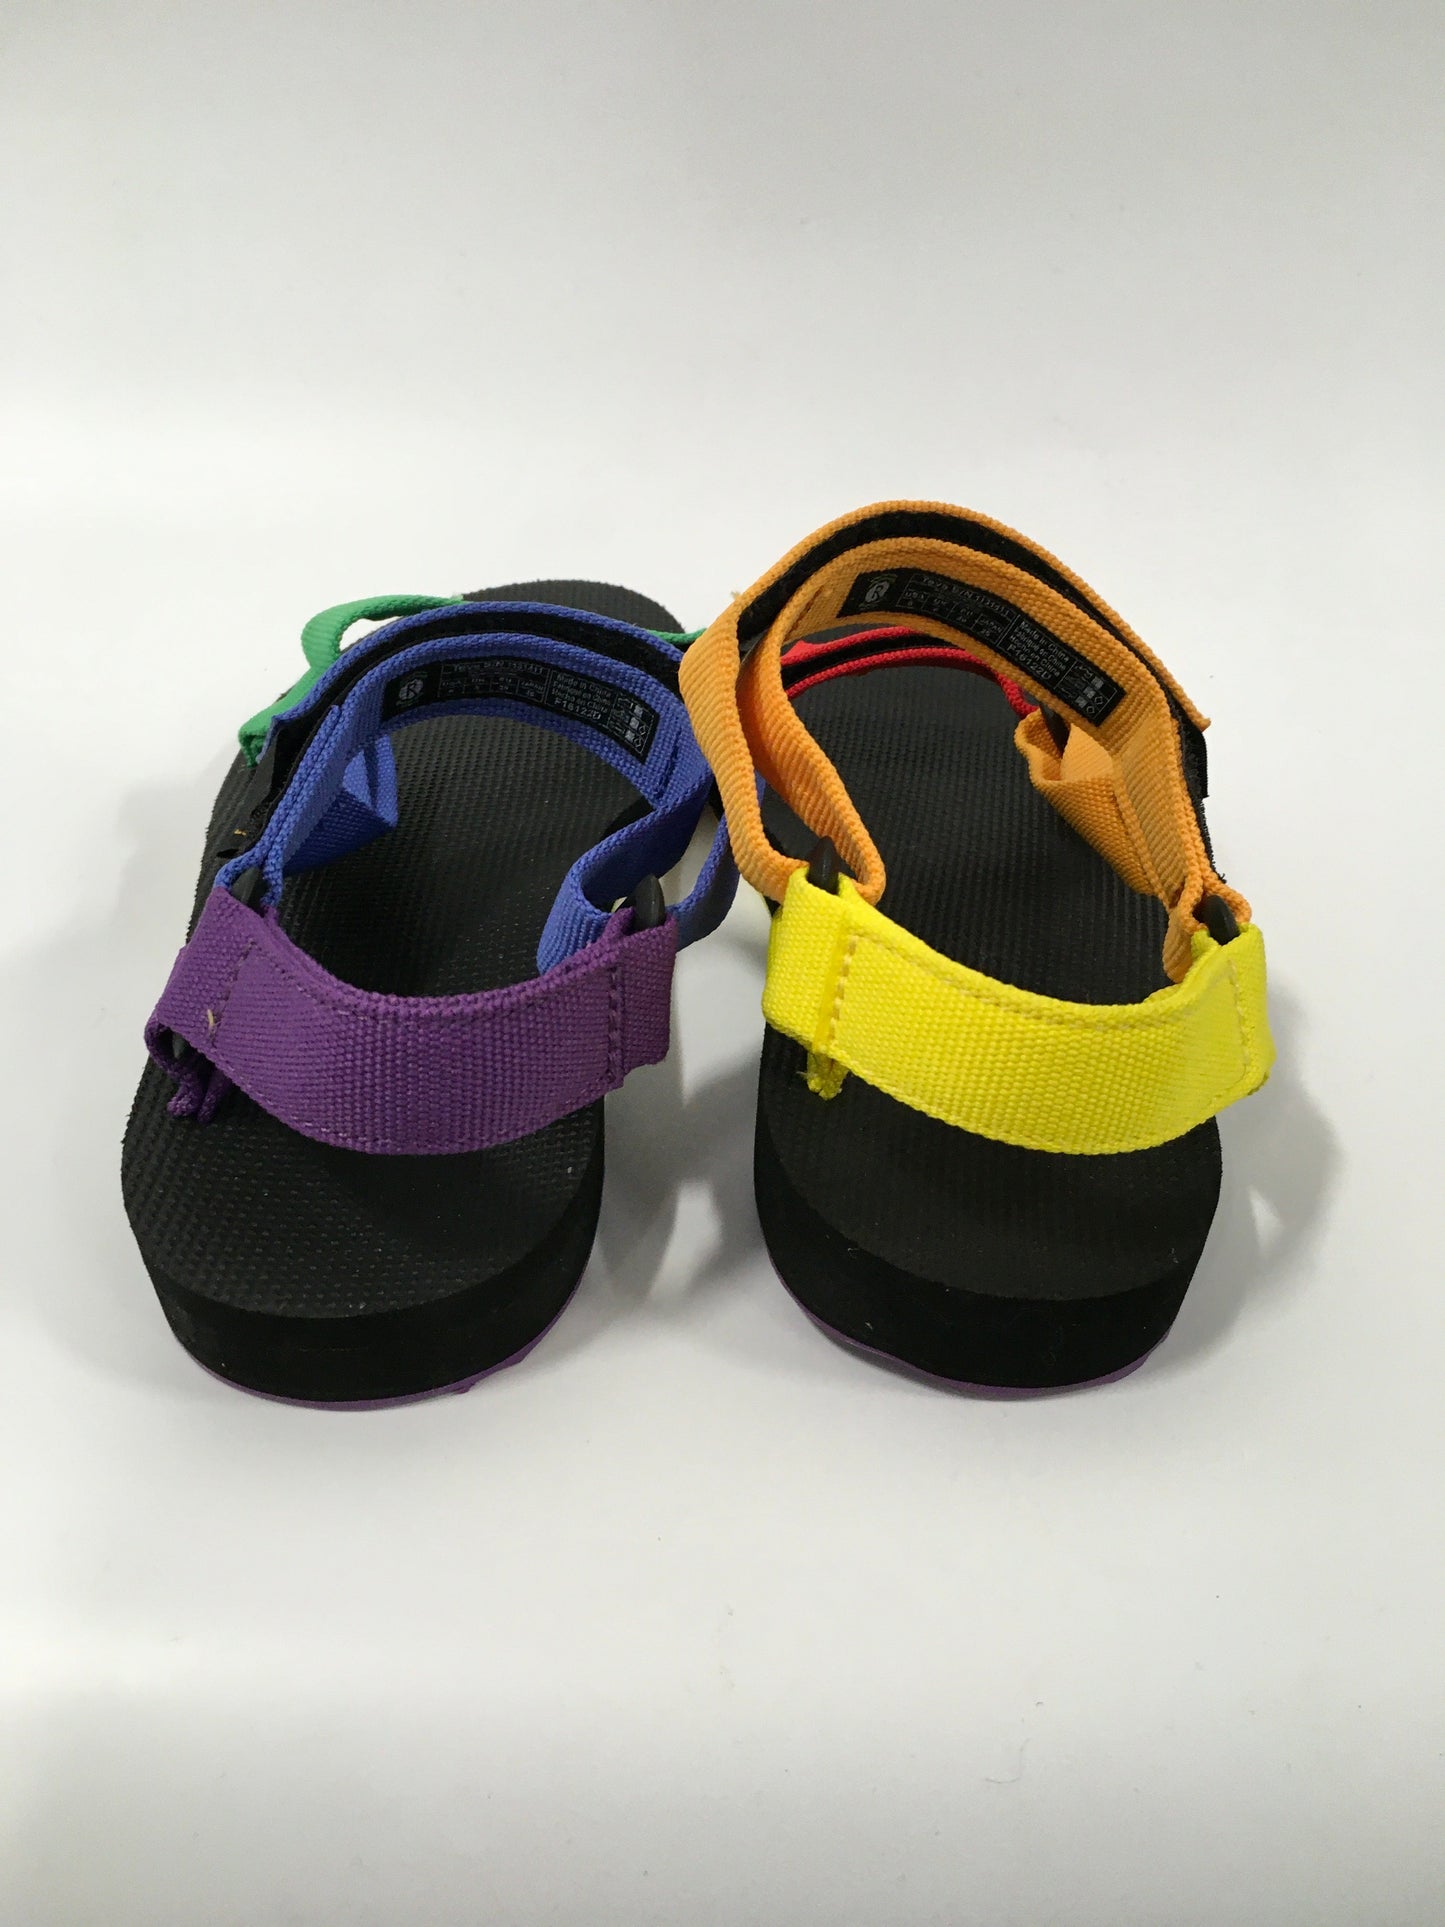 Rainbow Print Sandals Flats Teva, Size 8